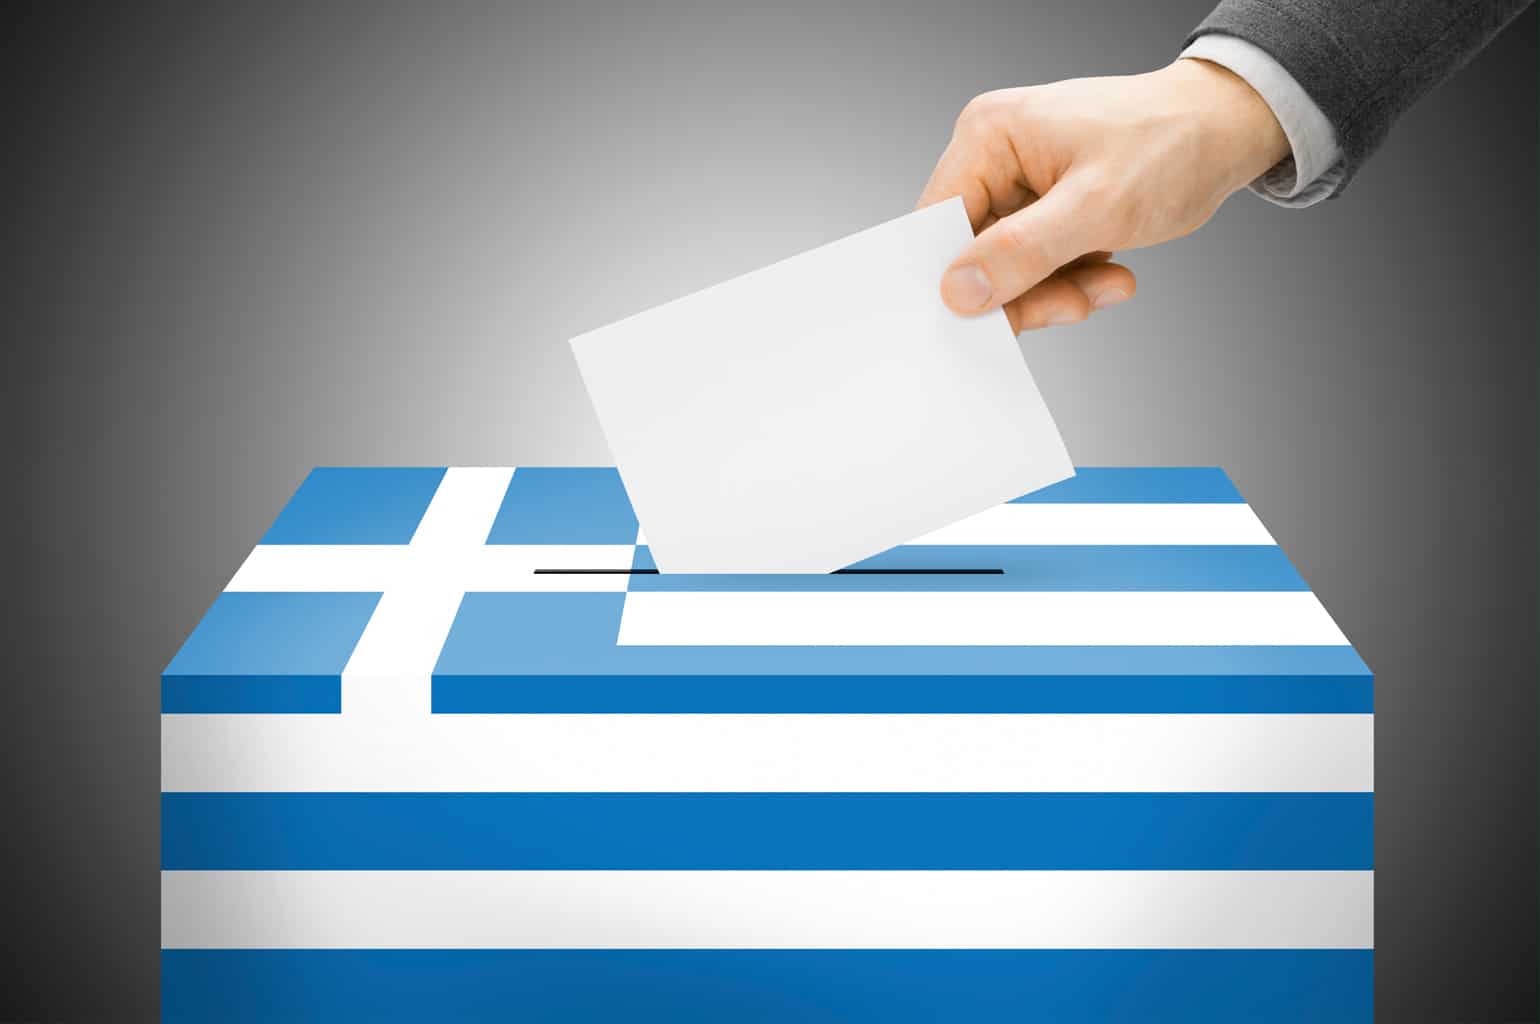 greek elections